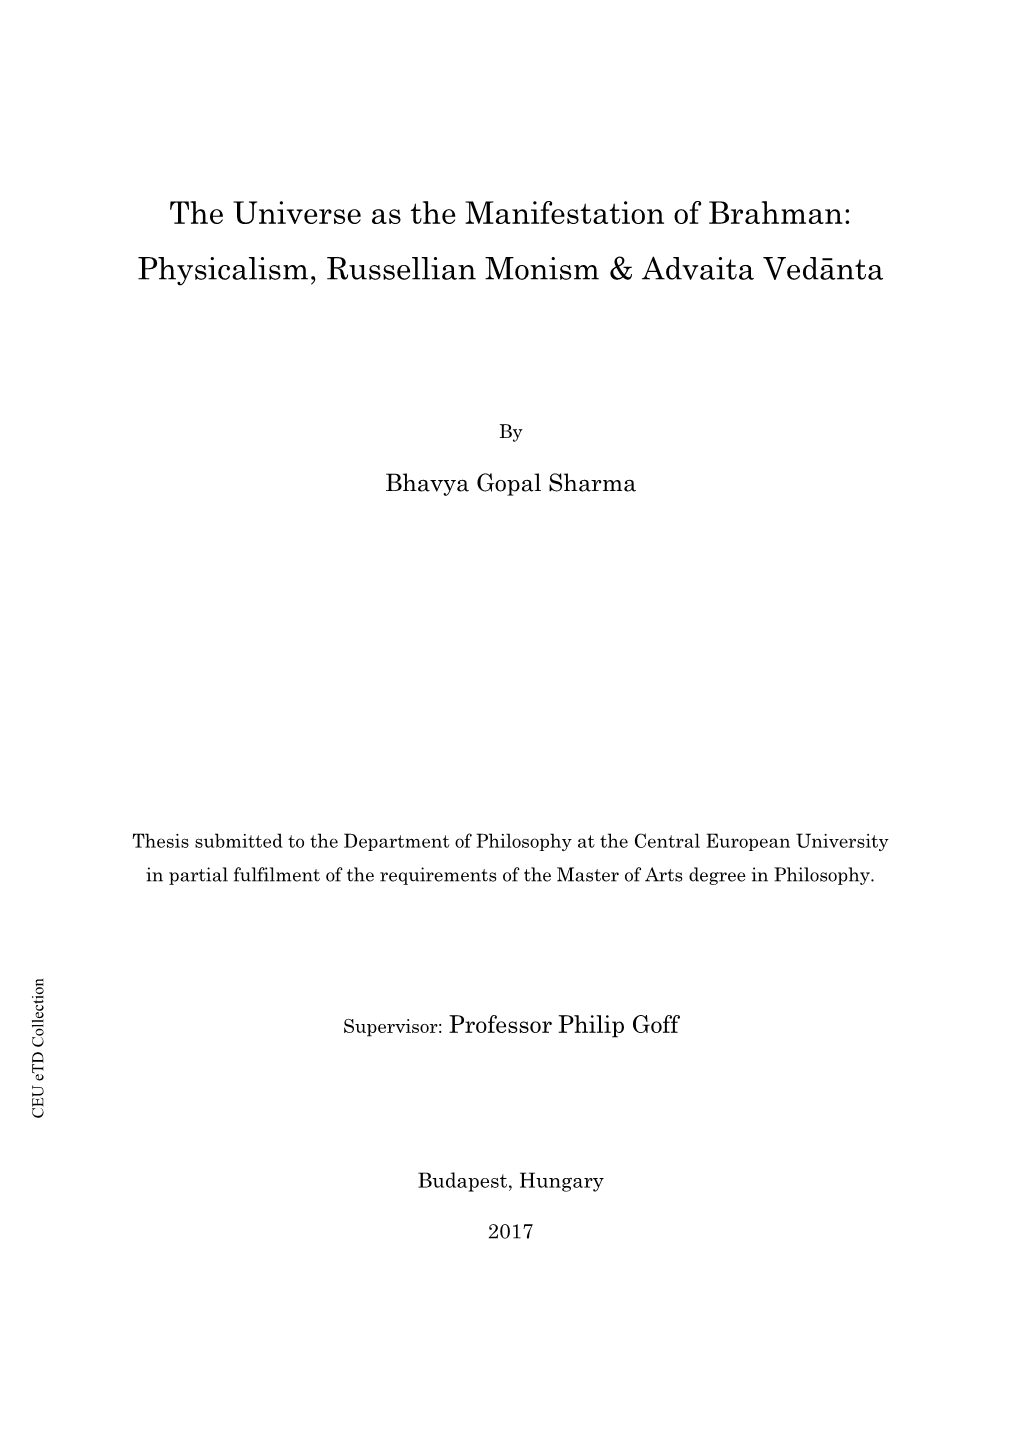 Physicalism, Russellian Monism & Advaita Vedānta